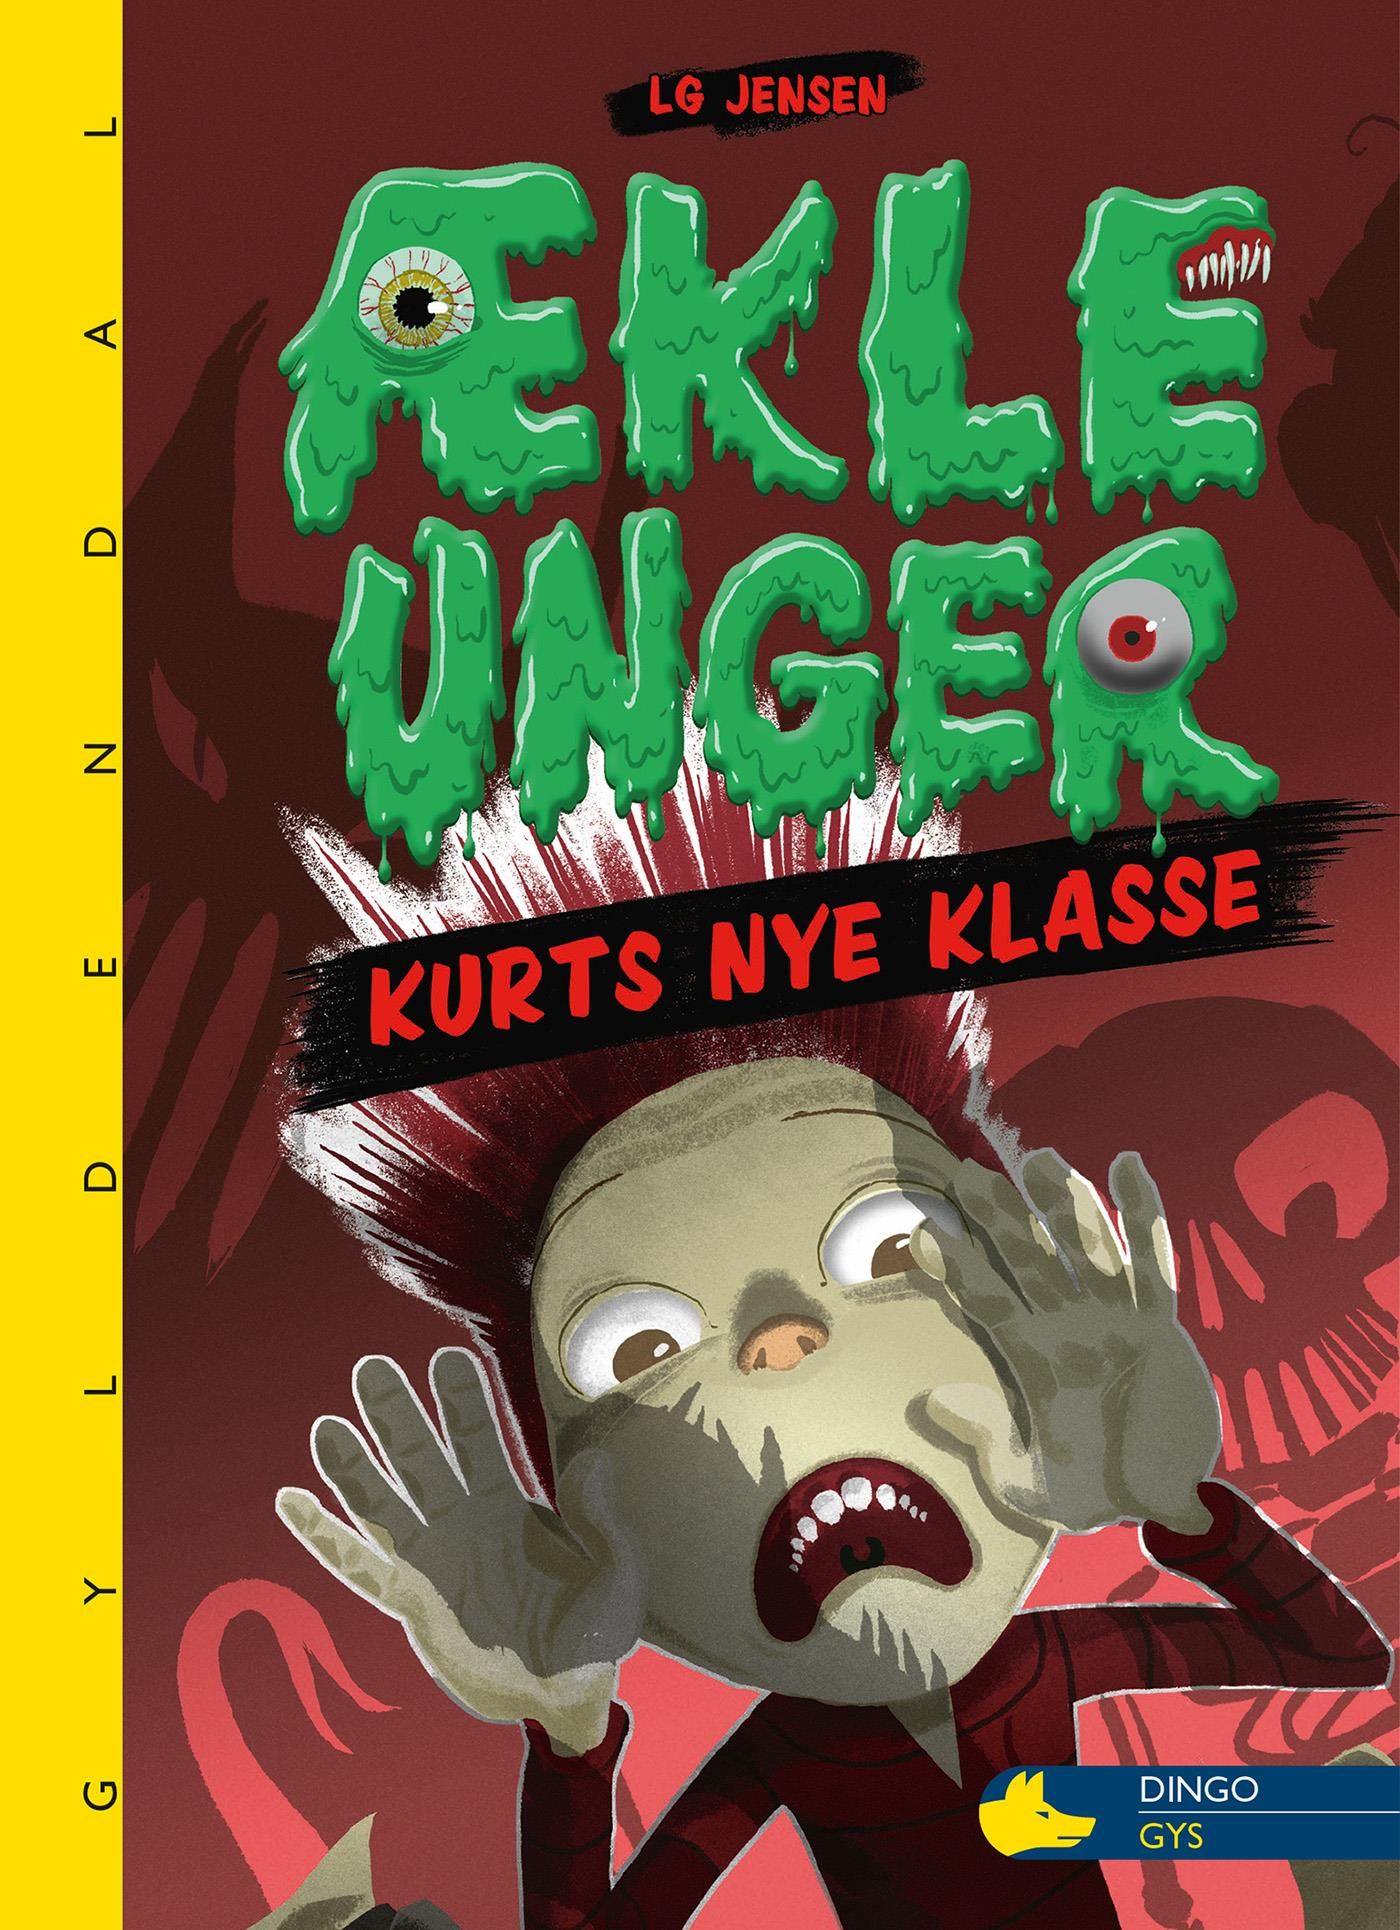 ÆKLE UNGER - Kurts nye klasse, eBook by LG Jensen